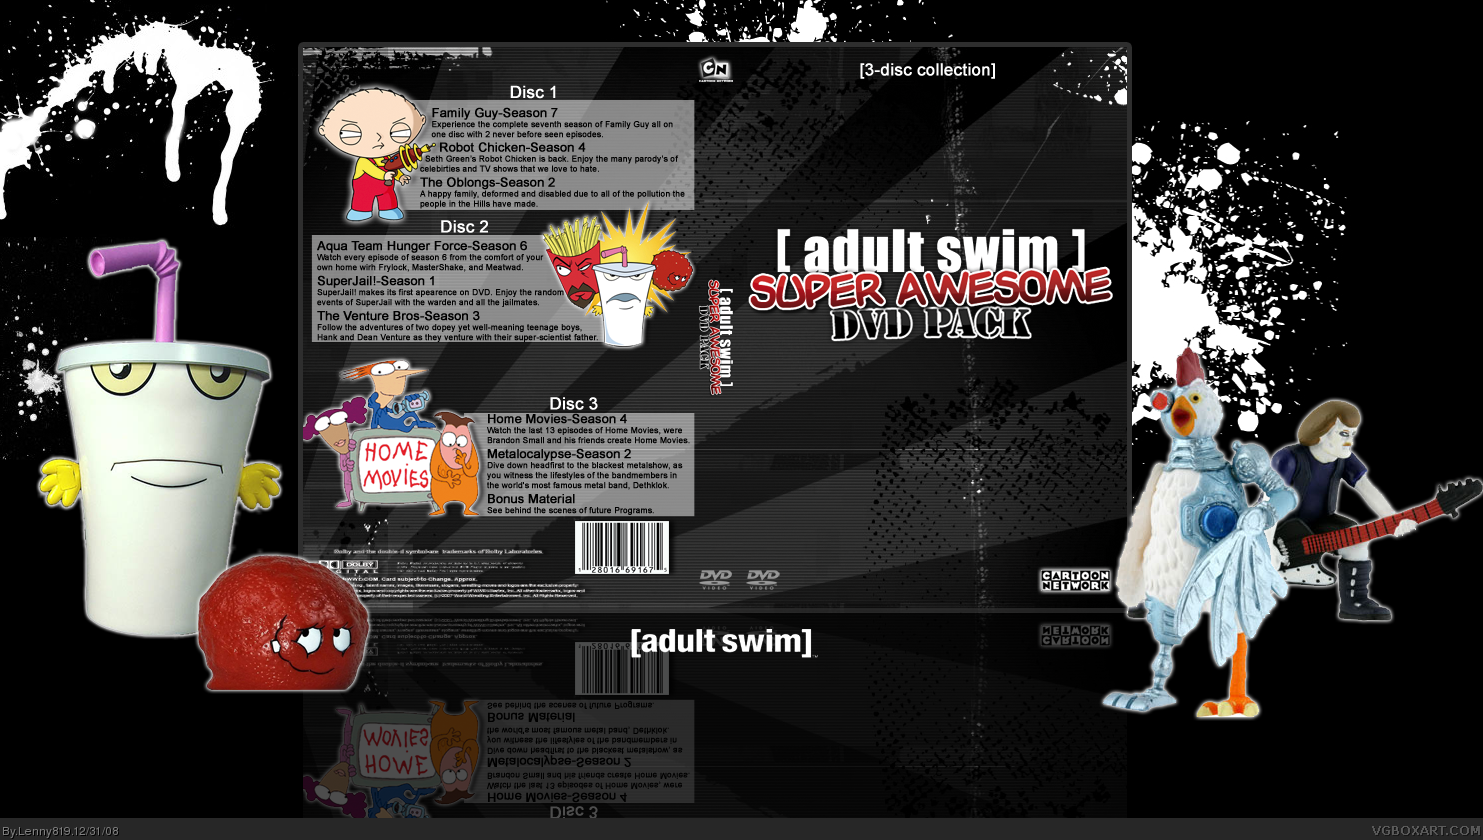 Adult Swim Super Awsome DVD Pack box cover